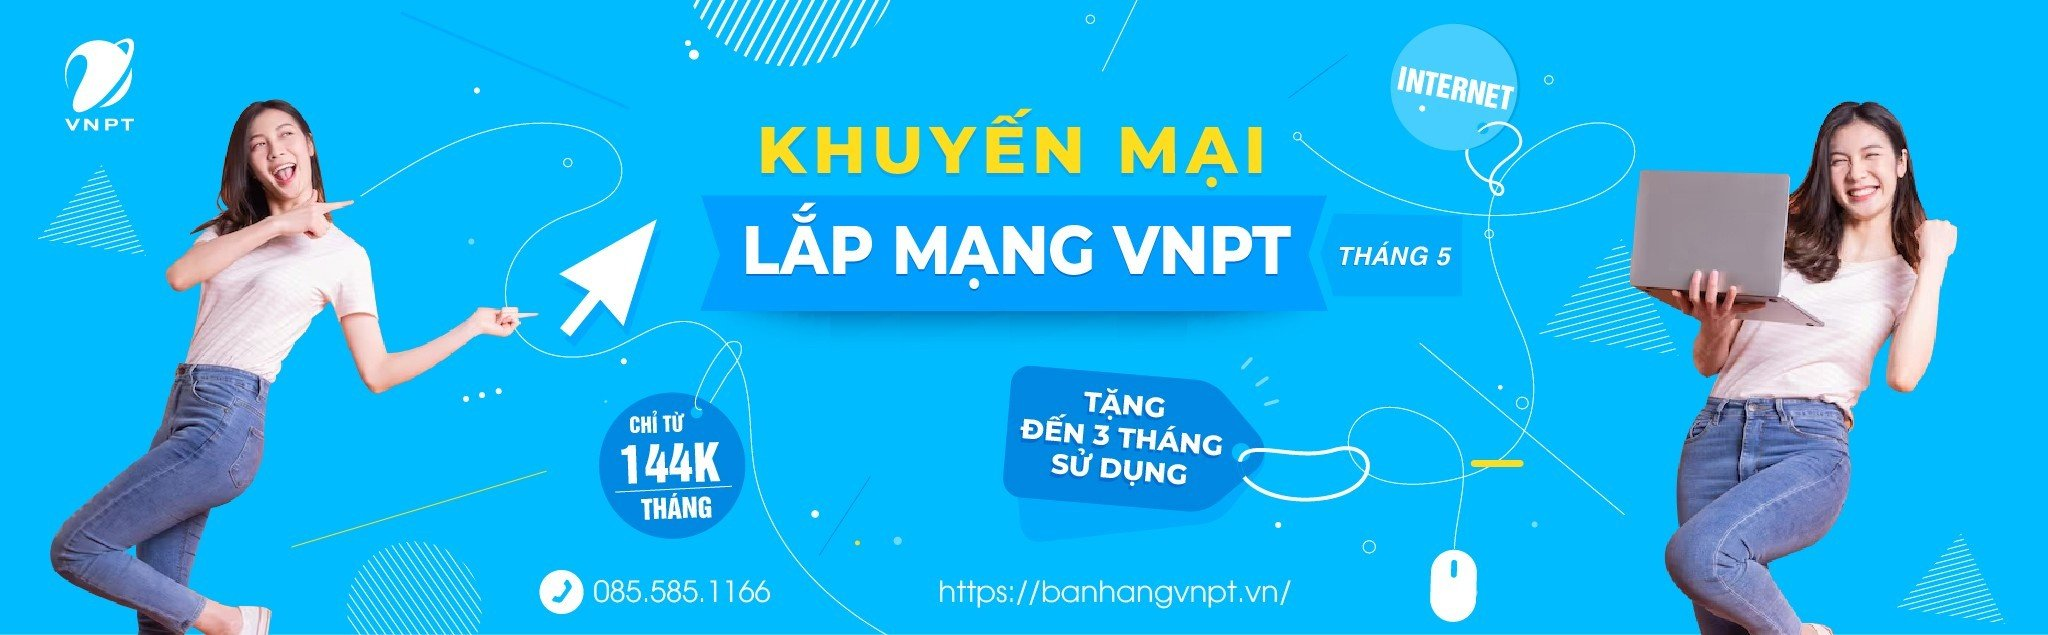 KHUYEN MAI LAP MANG VNPT THANG 5